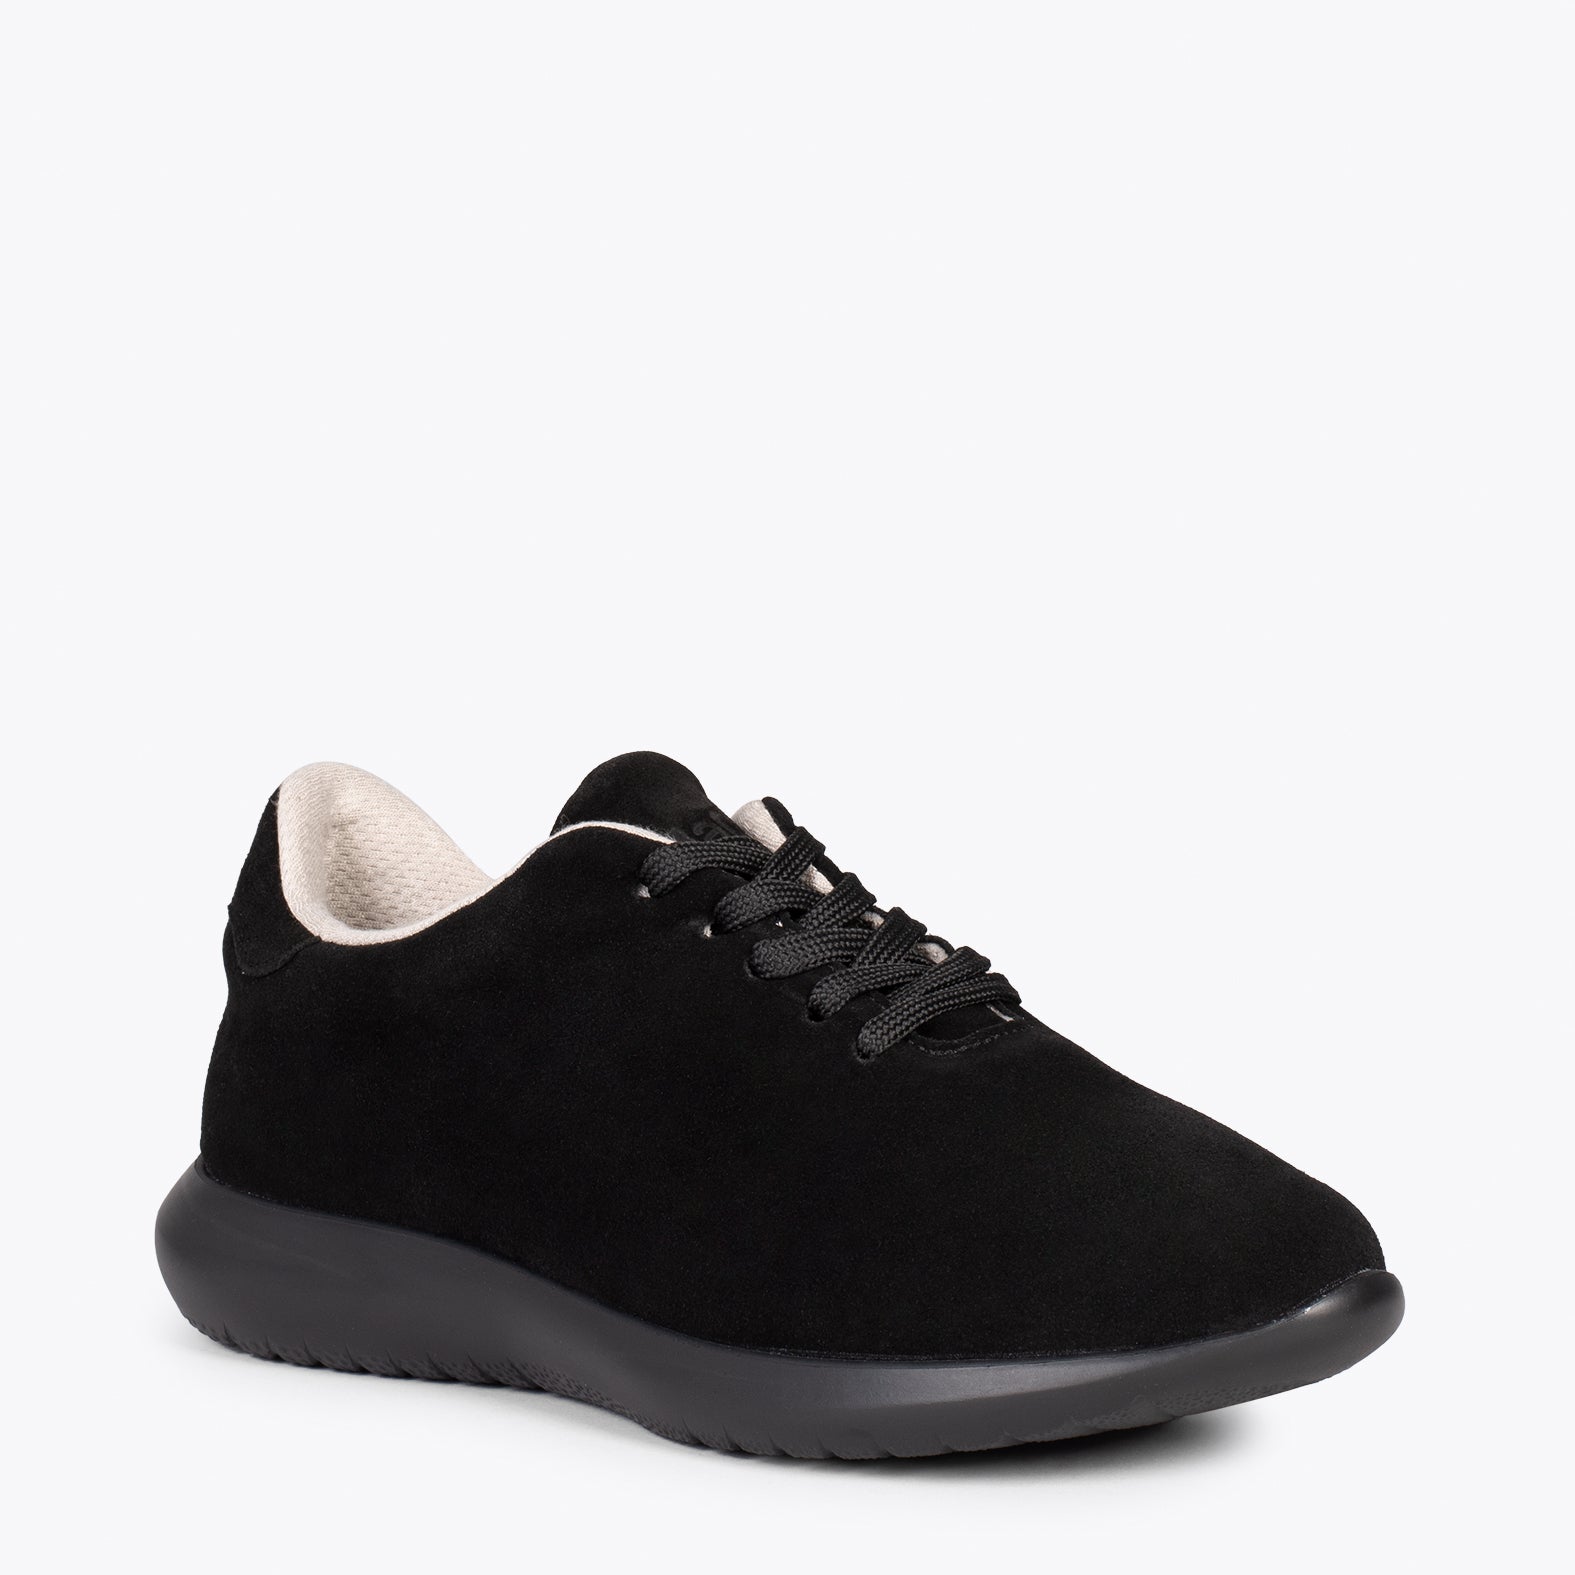 WALK – TOTAL BLACK comfortable women’s sneakers